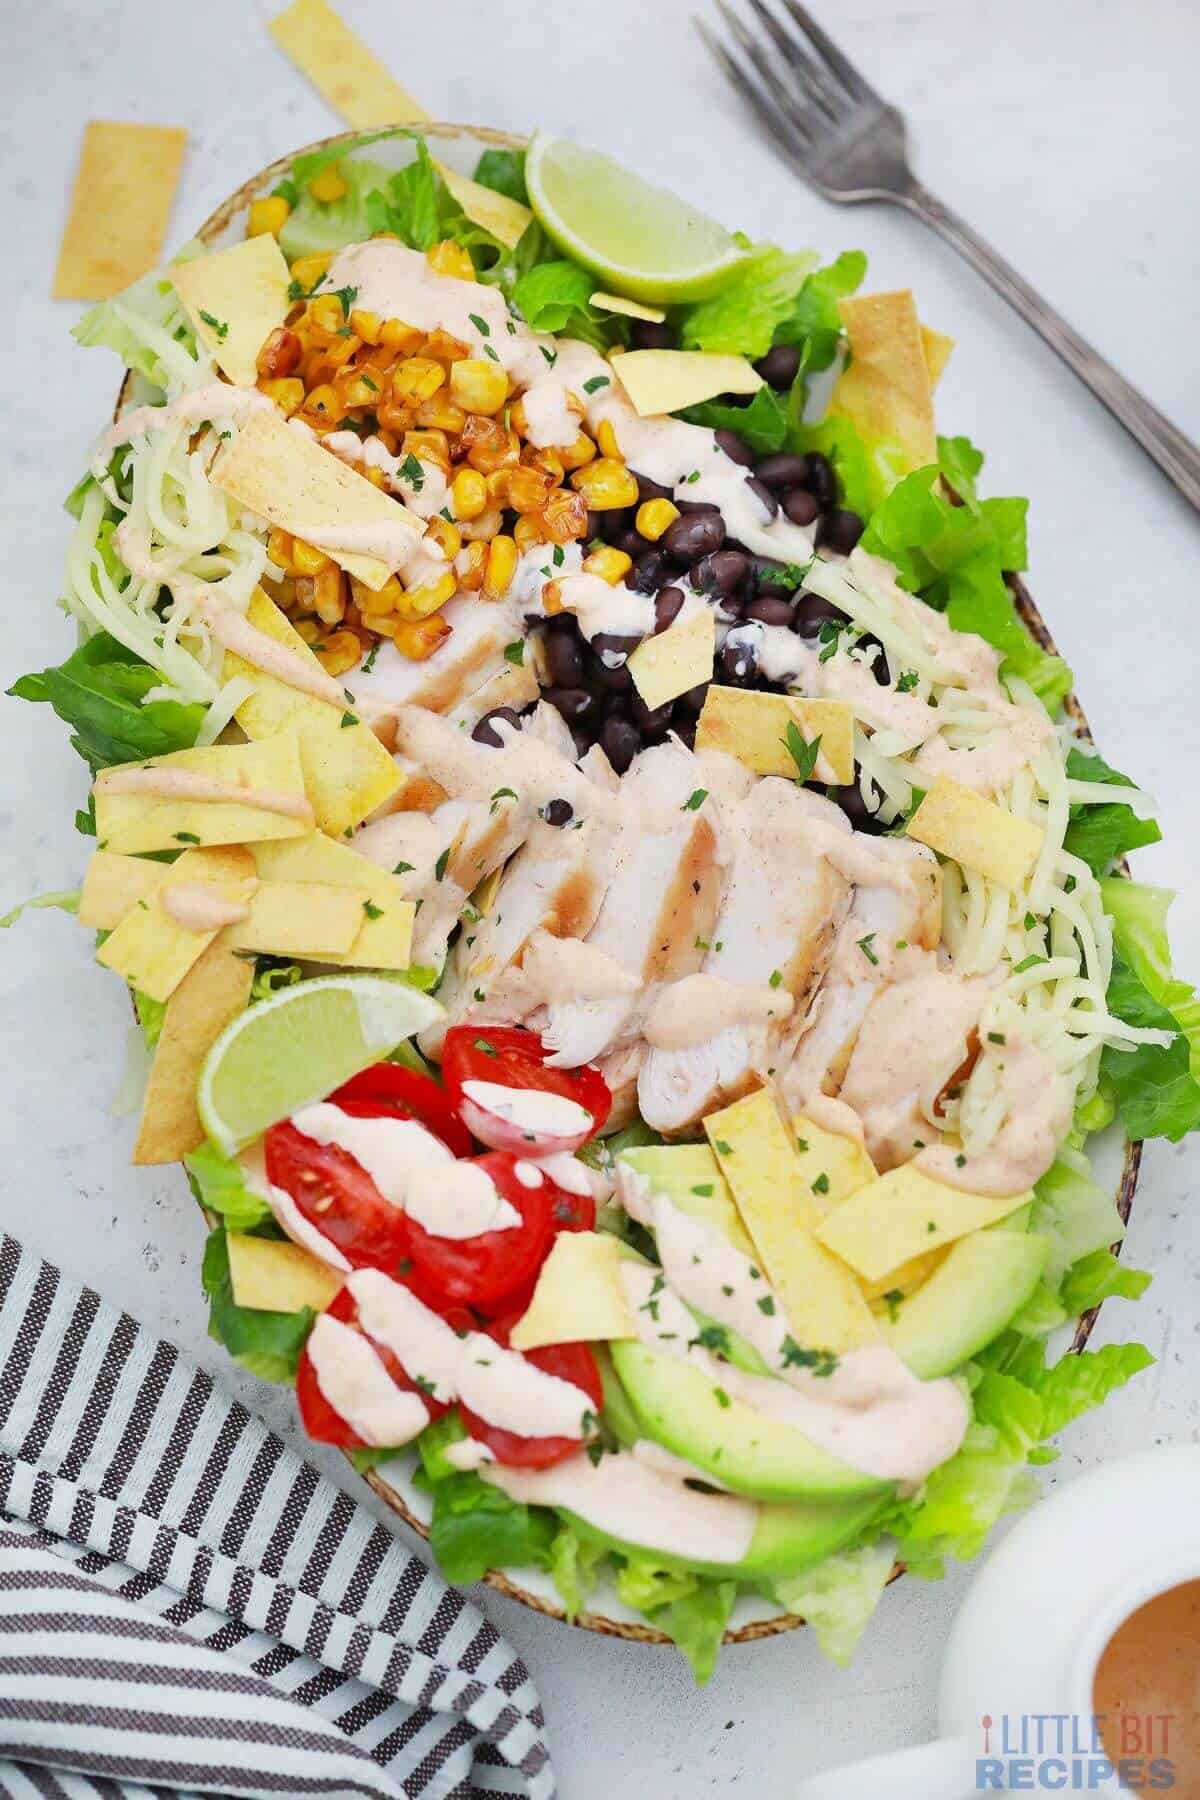 santa fe salad with fork and striped napkin.